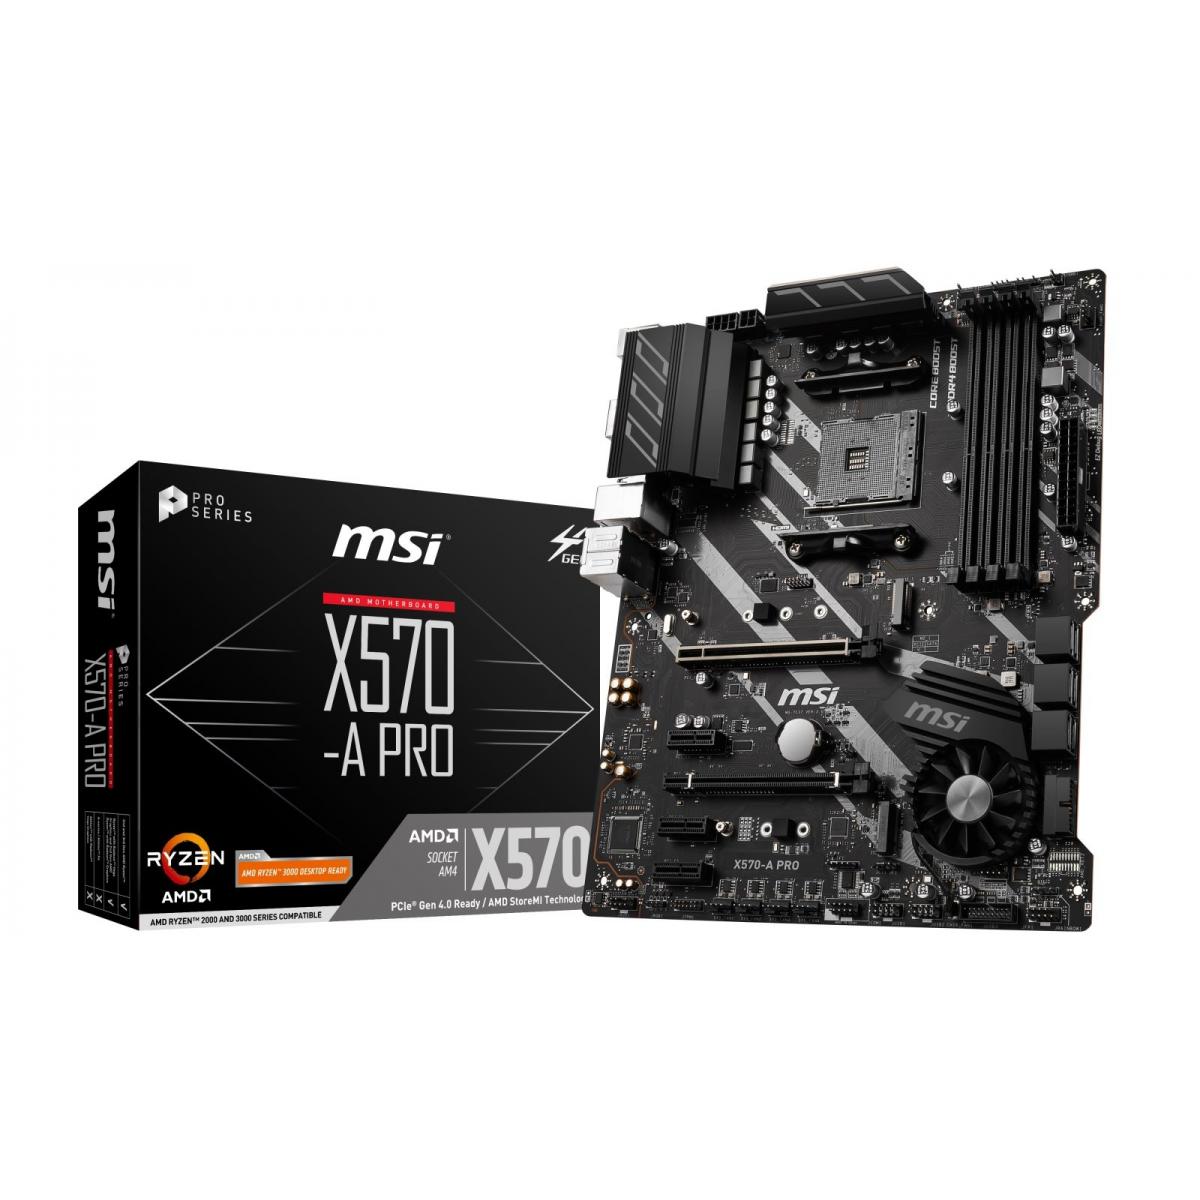 MSI AMD Ryzen X570 A PRO AM4 PCIe 4.0 ATX Motherboard